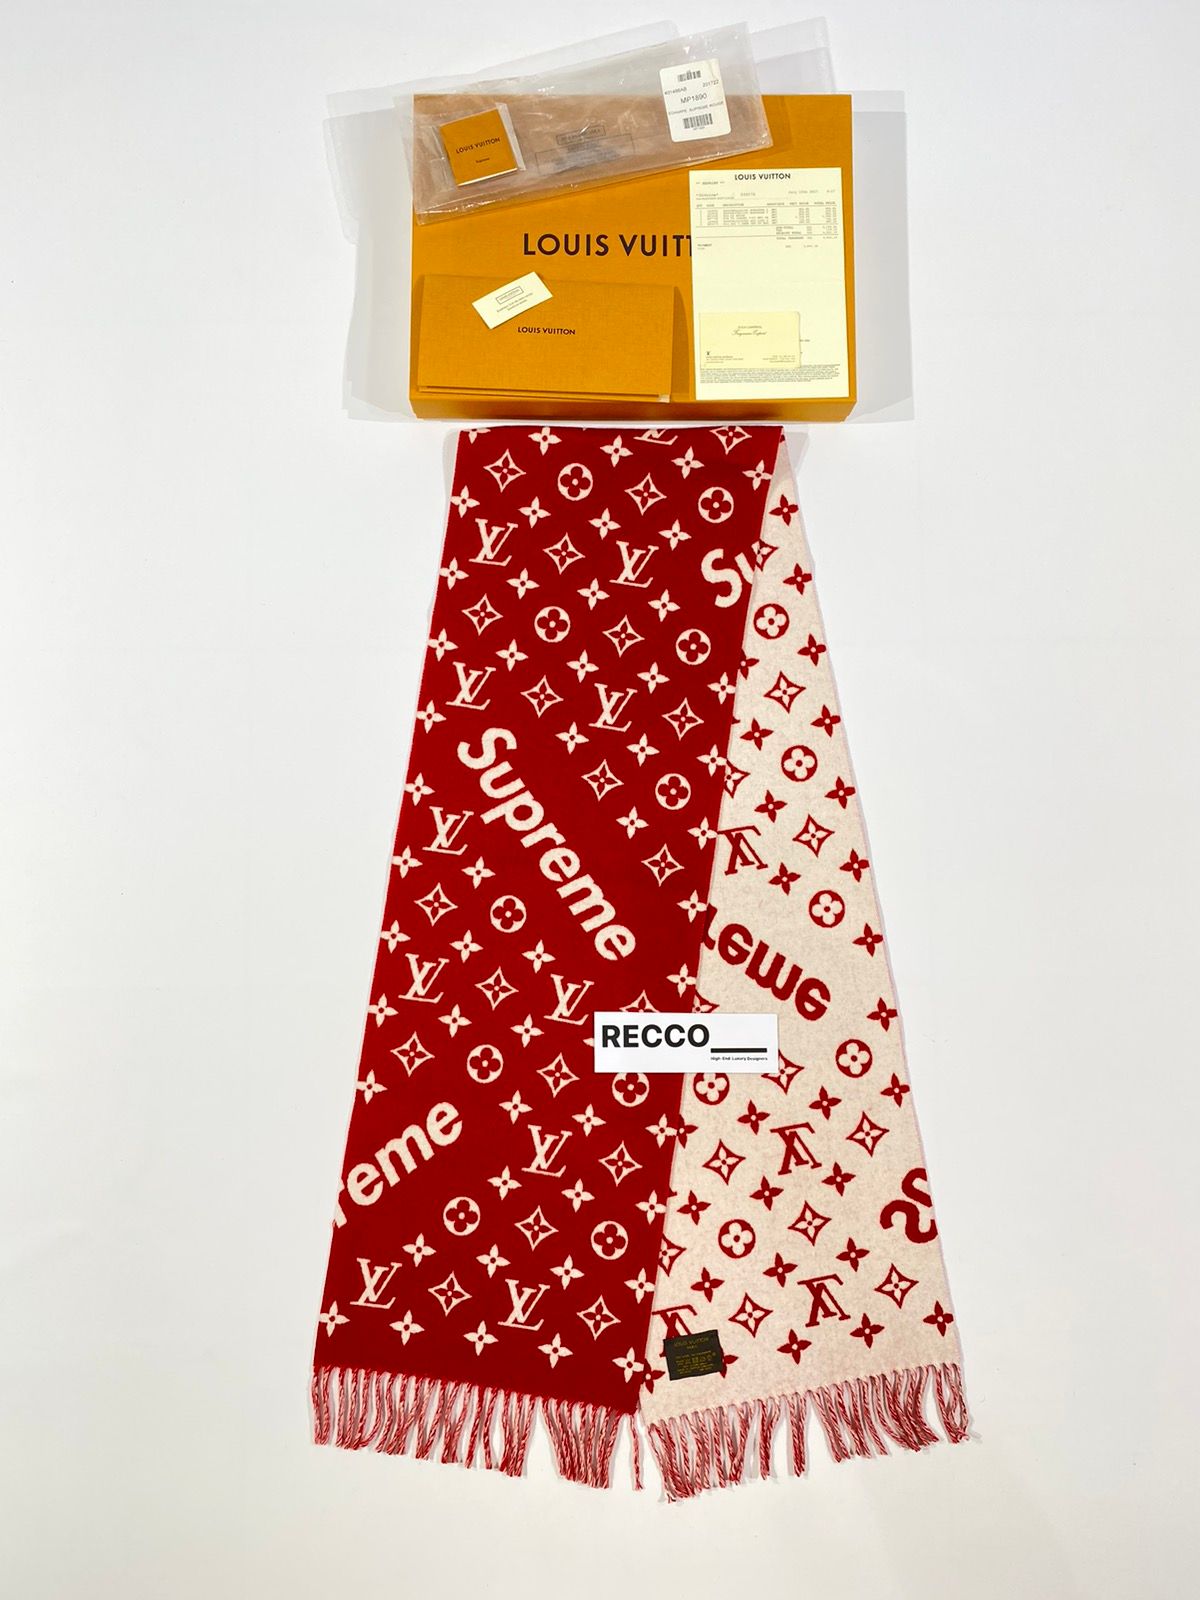 Supreme Louis Vuitton Monogram Bandana Red mini scarf 55 cm R52